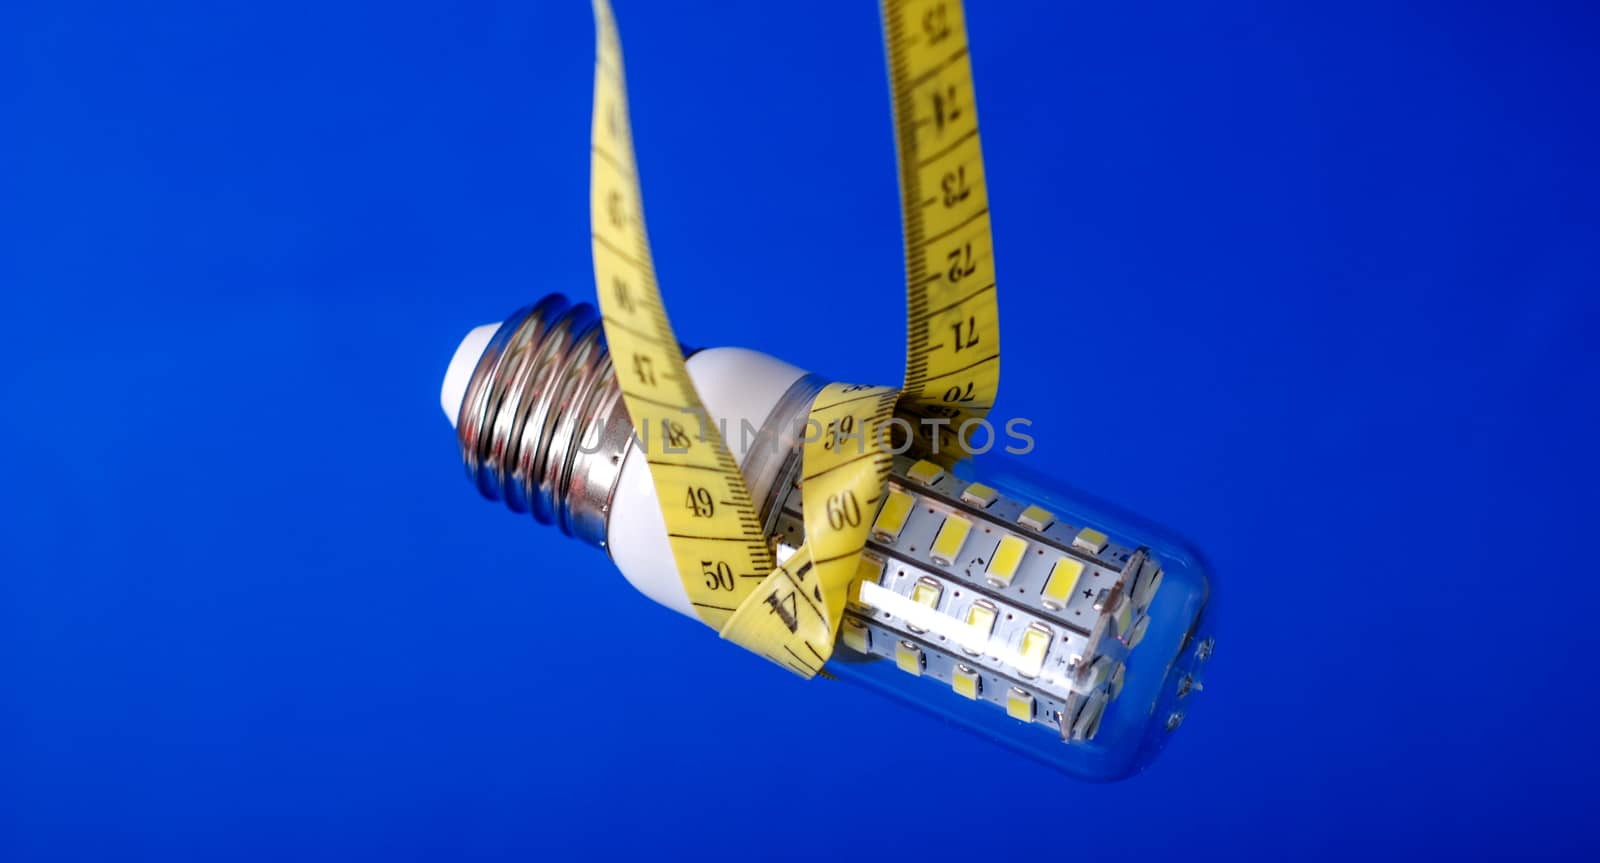  Energy saving LED light bulb  by nehru